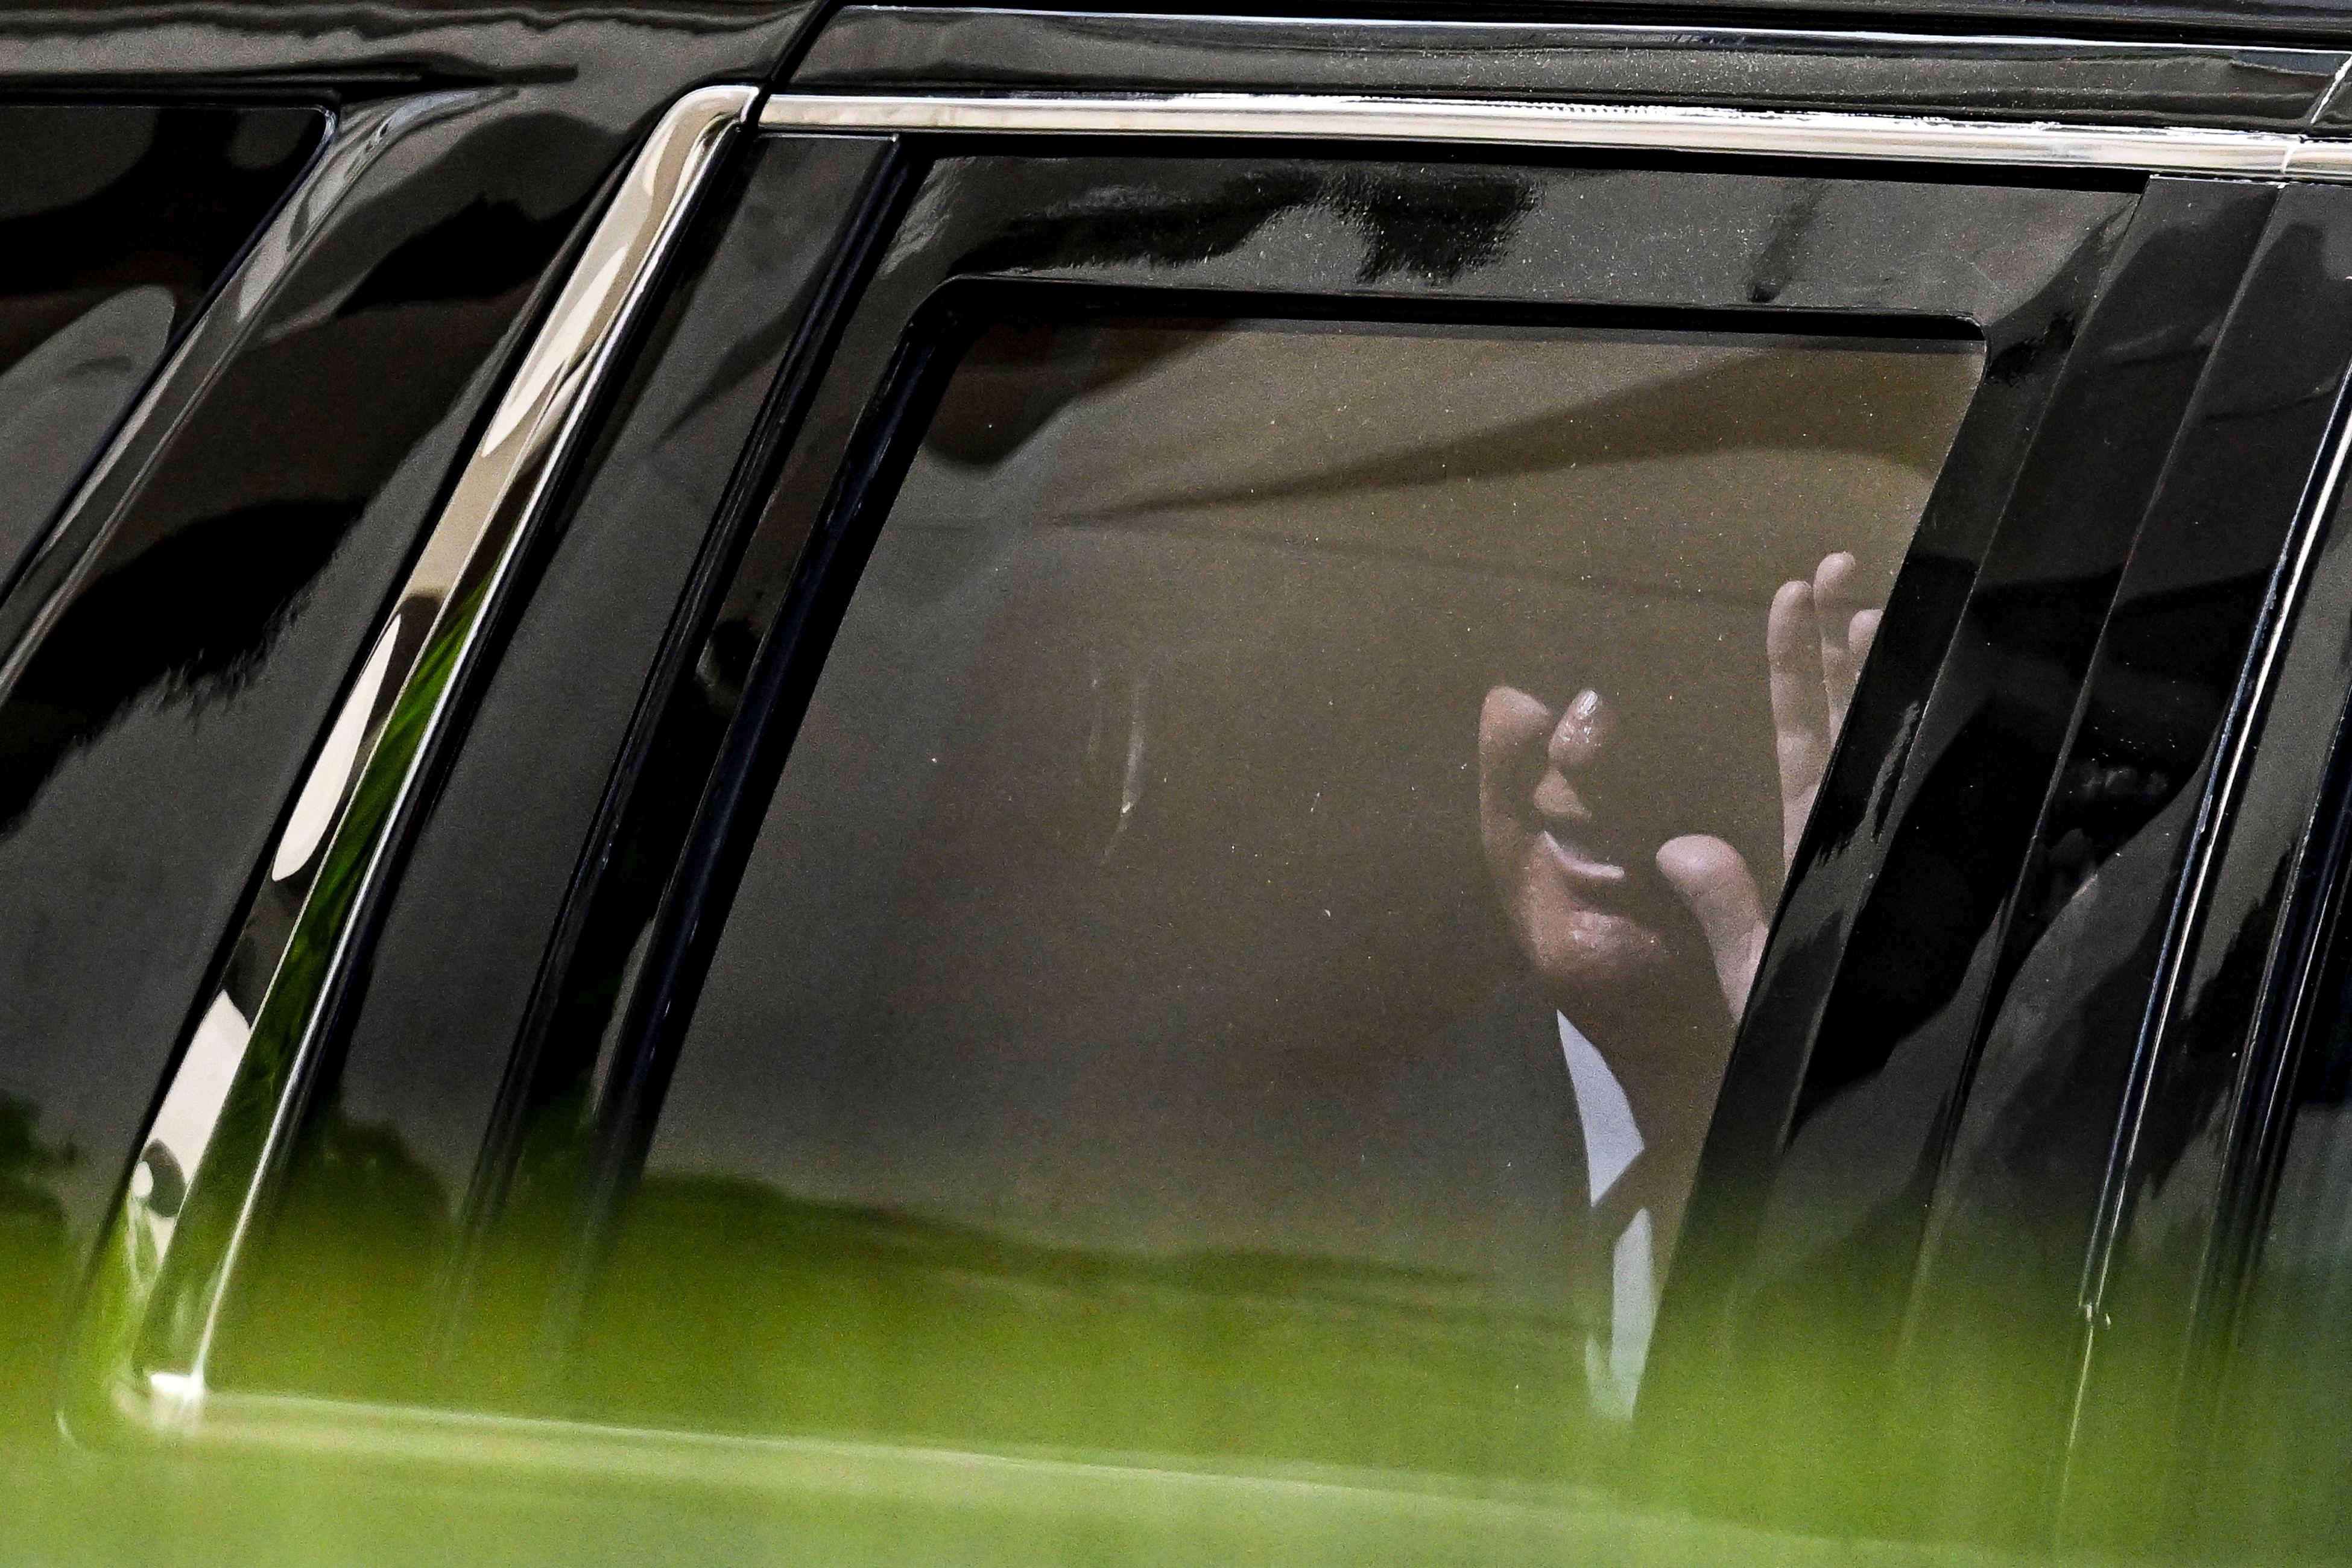 Trump waving through a car window